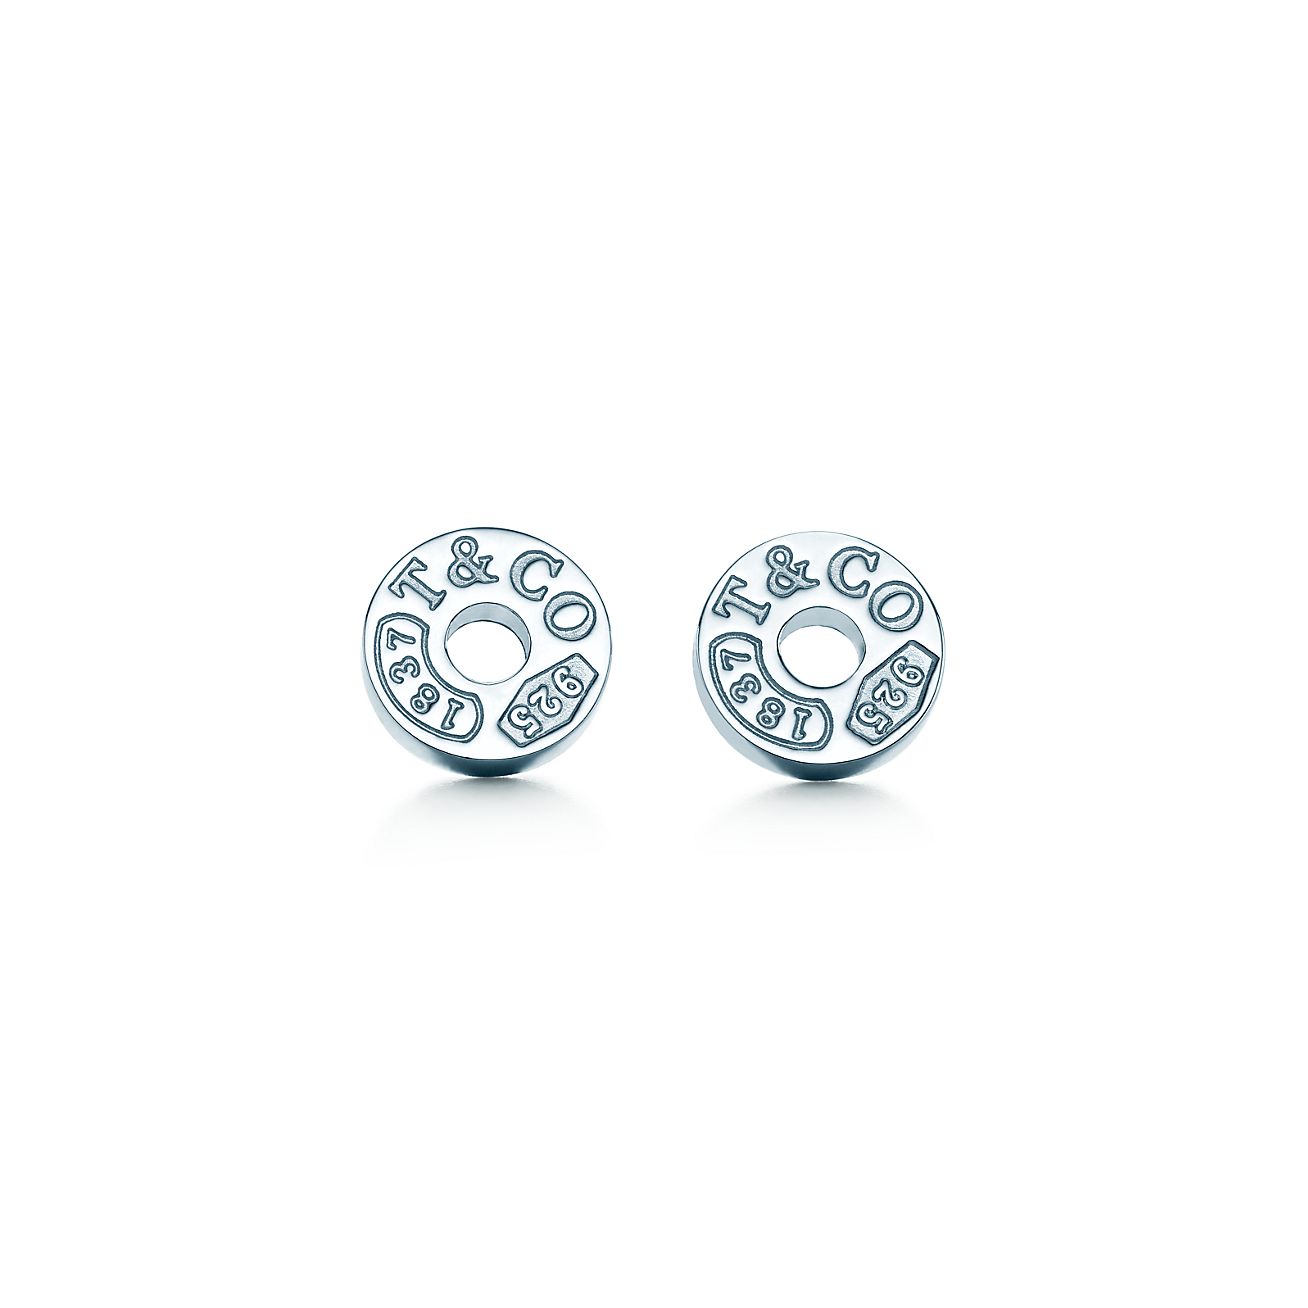 Tiffany 1837™ circle earrings in sterling silver. | Tiffany & Co.